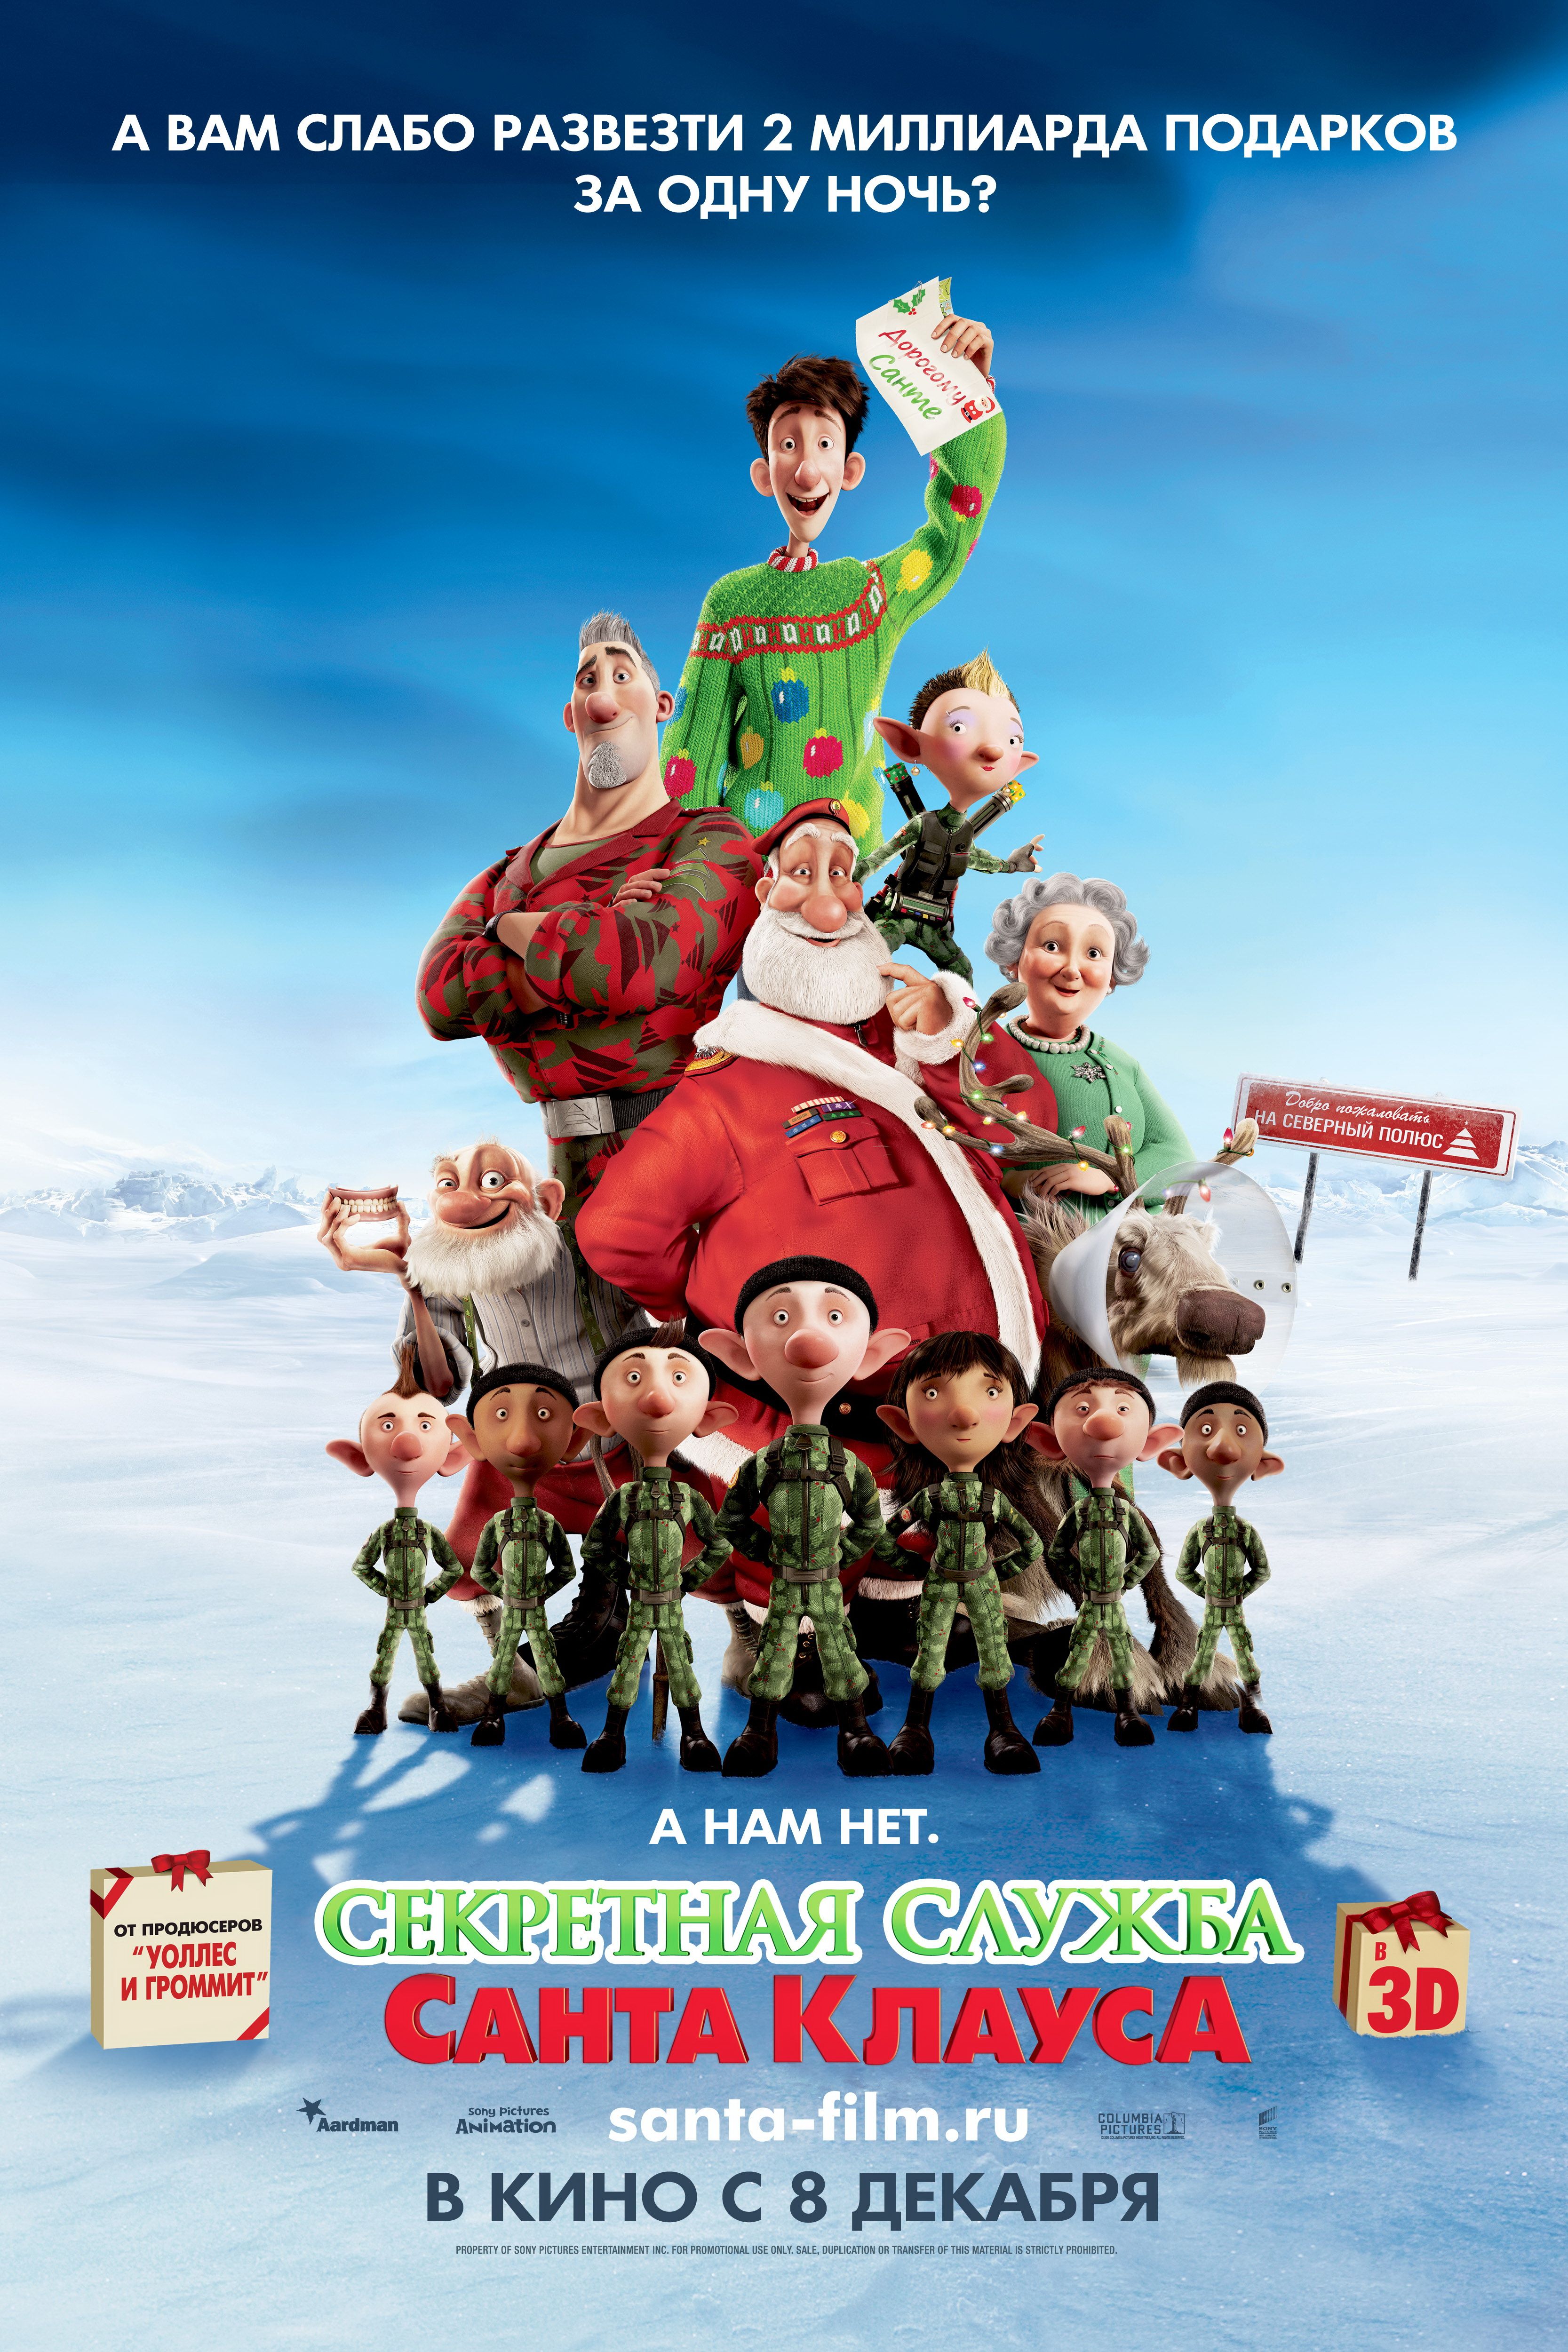 Watch Bad Santa 2 2016 Film Full-Length